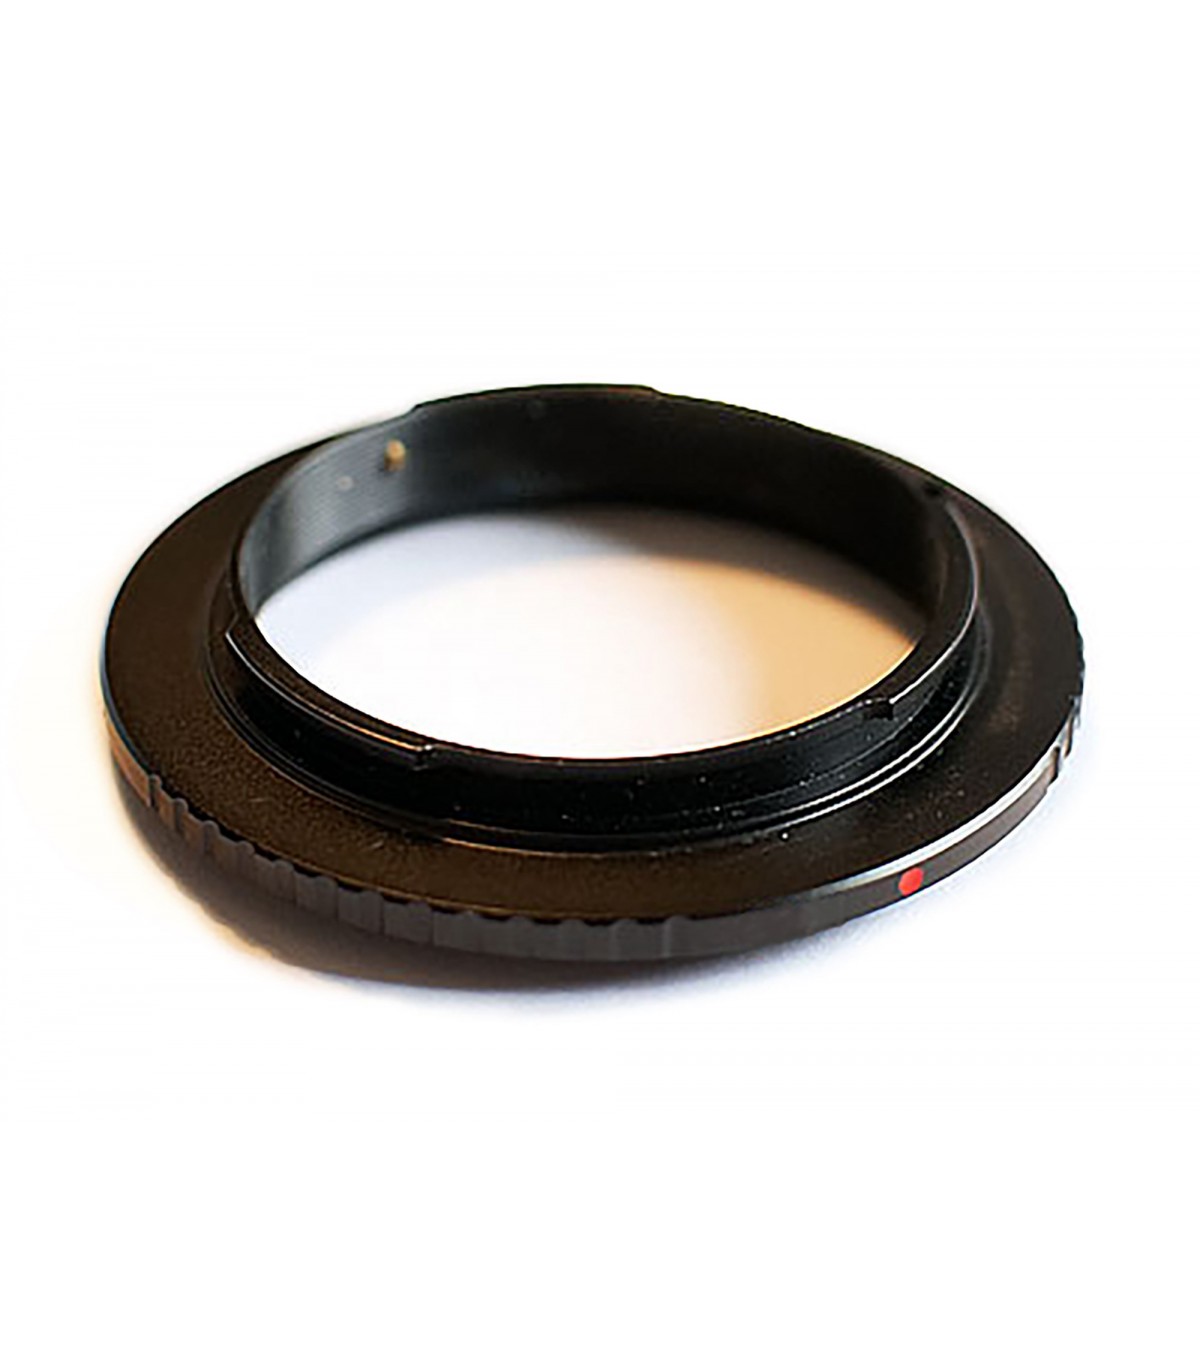 NEEWER LA-01 T Ring for Nikon F Mount Cameras & Telescopes - NEEWER